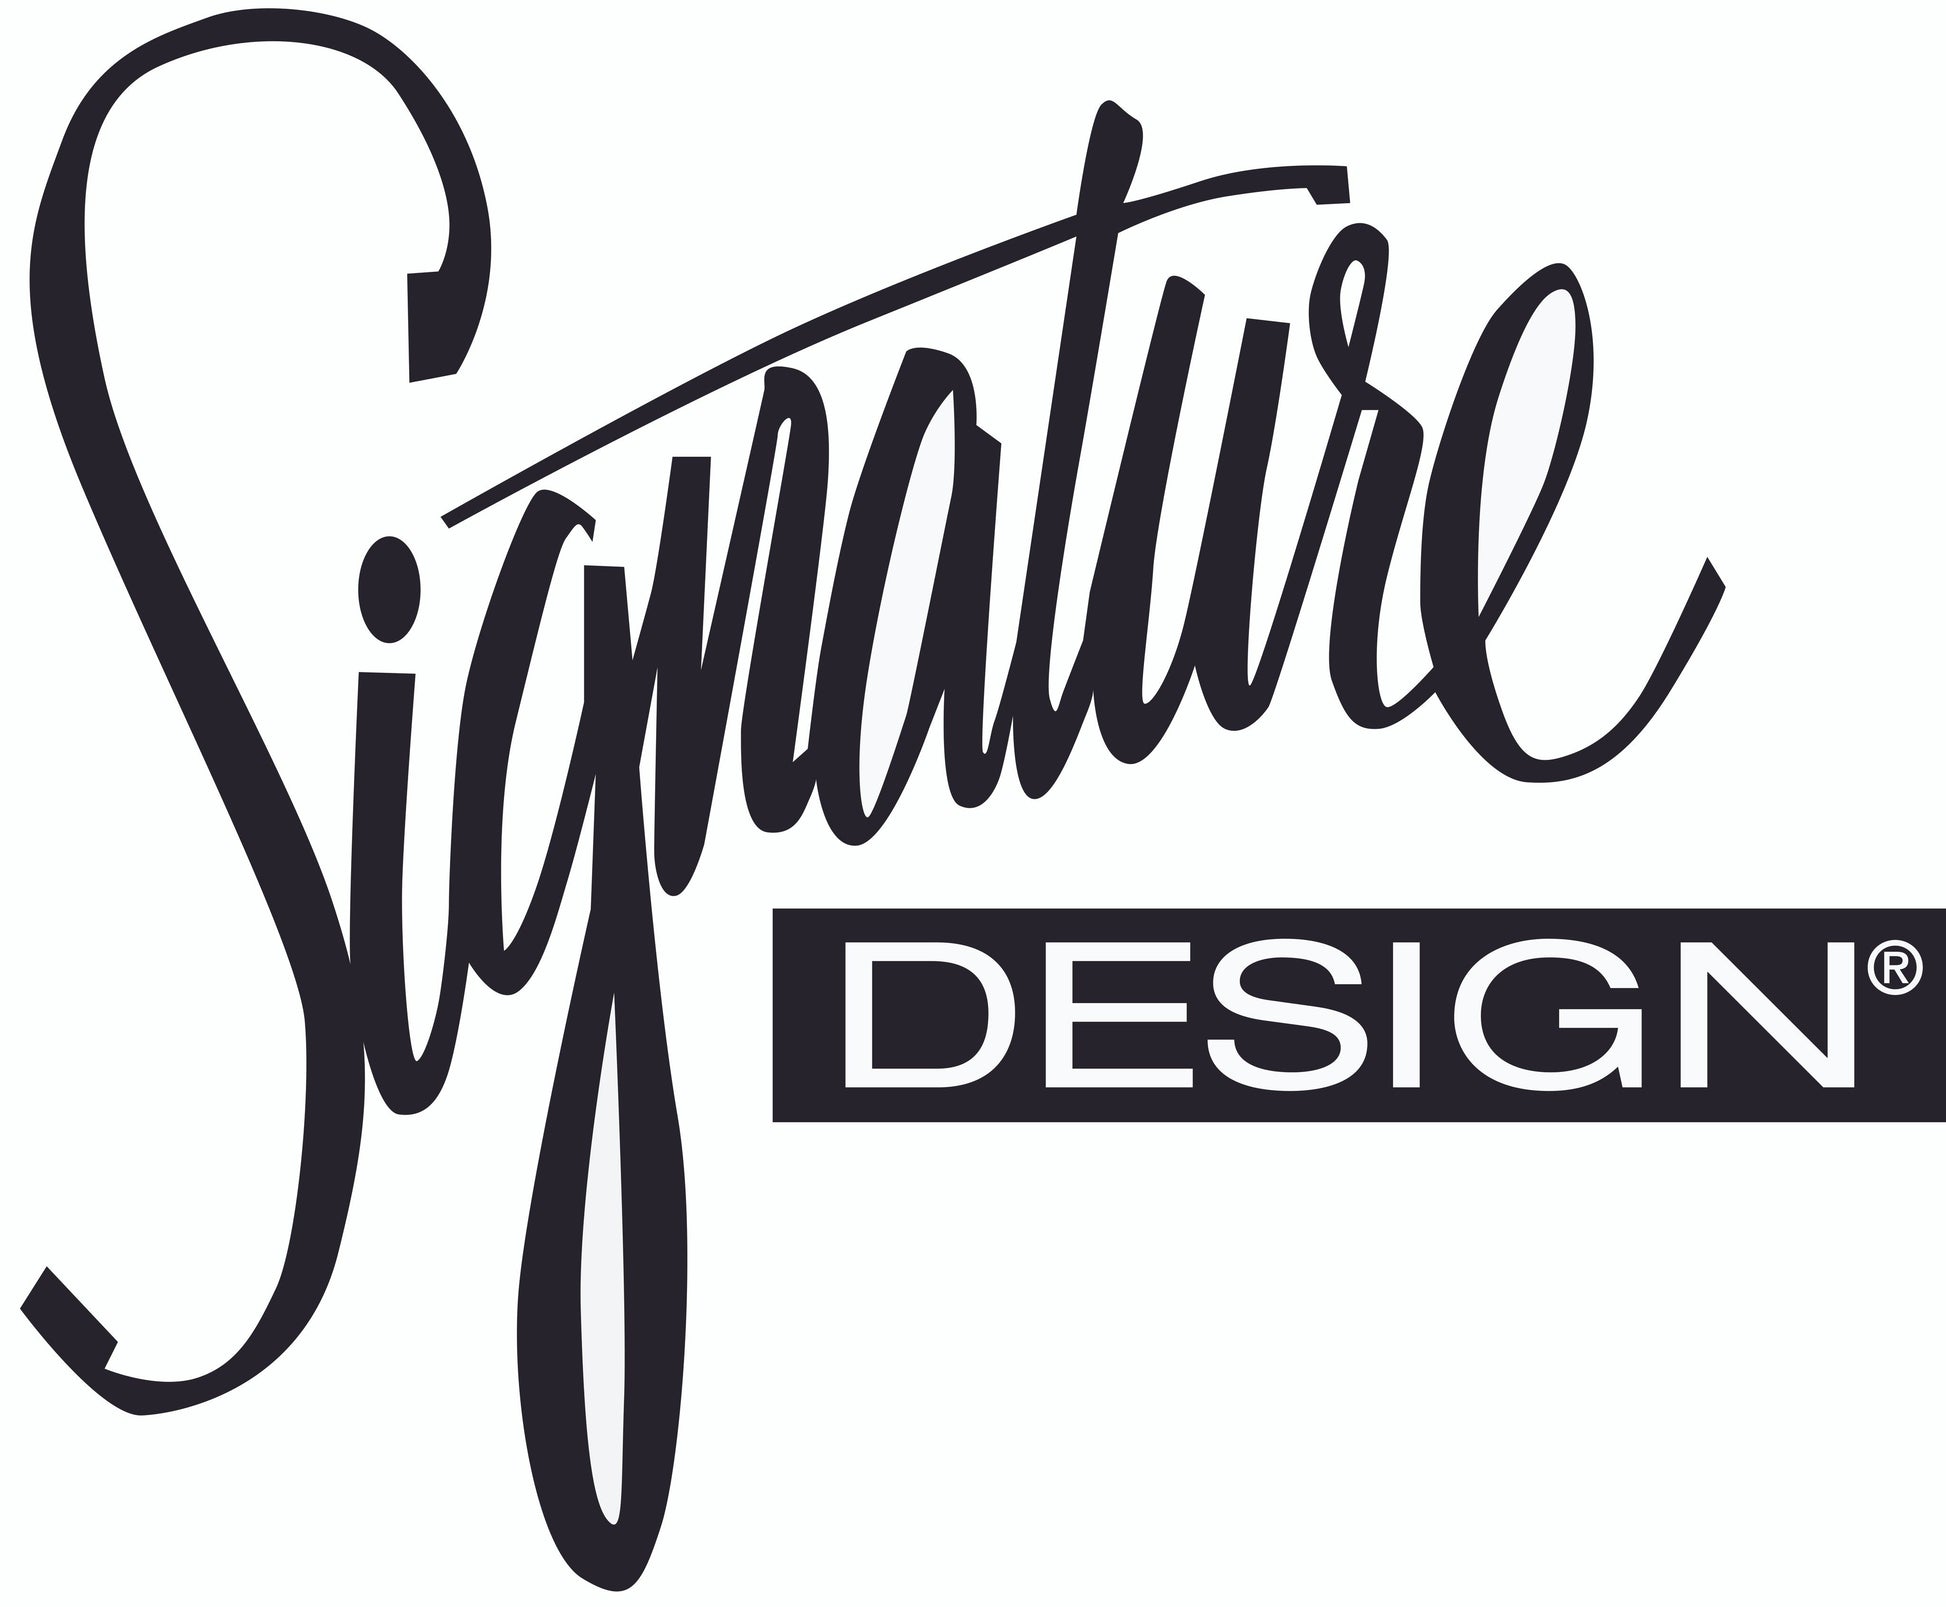 Garville Metal Desk Lamp (1/CN) Signature Design by Ashley®